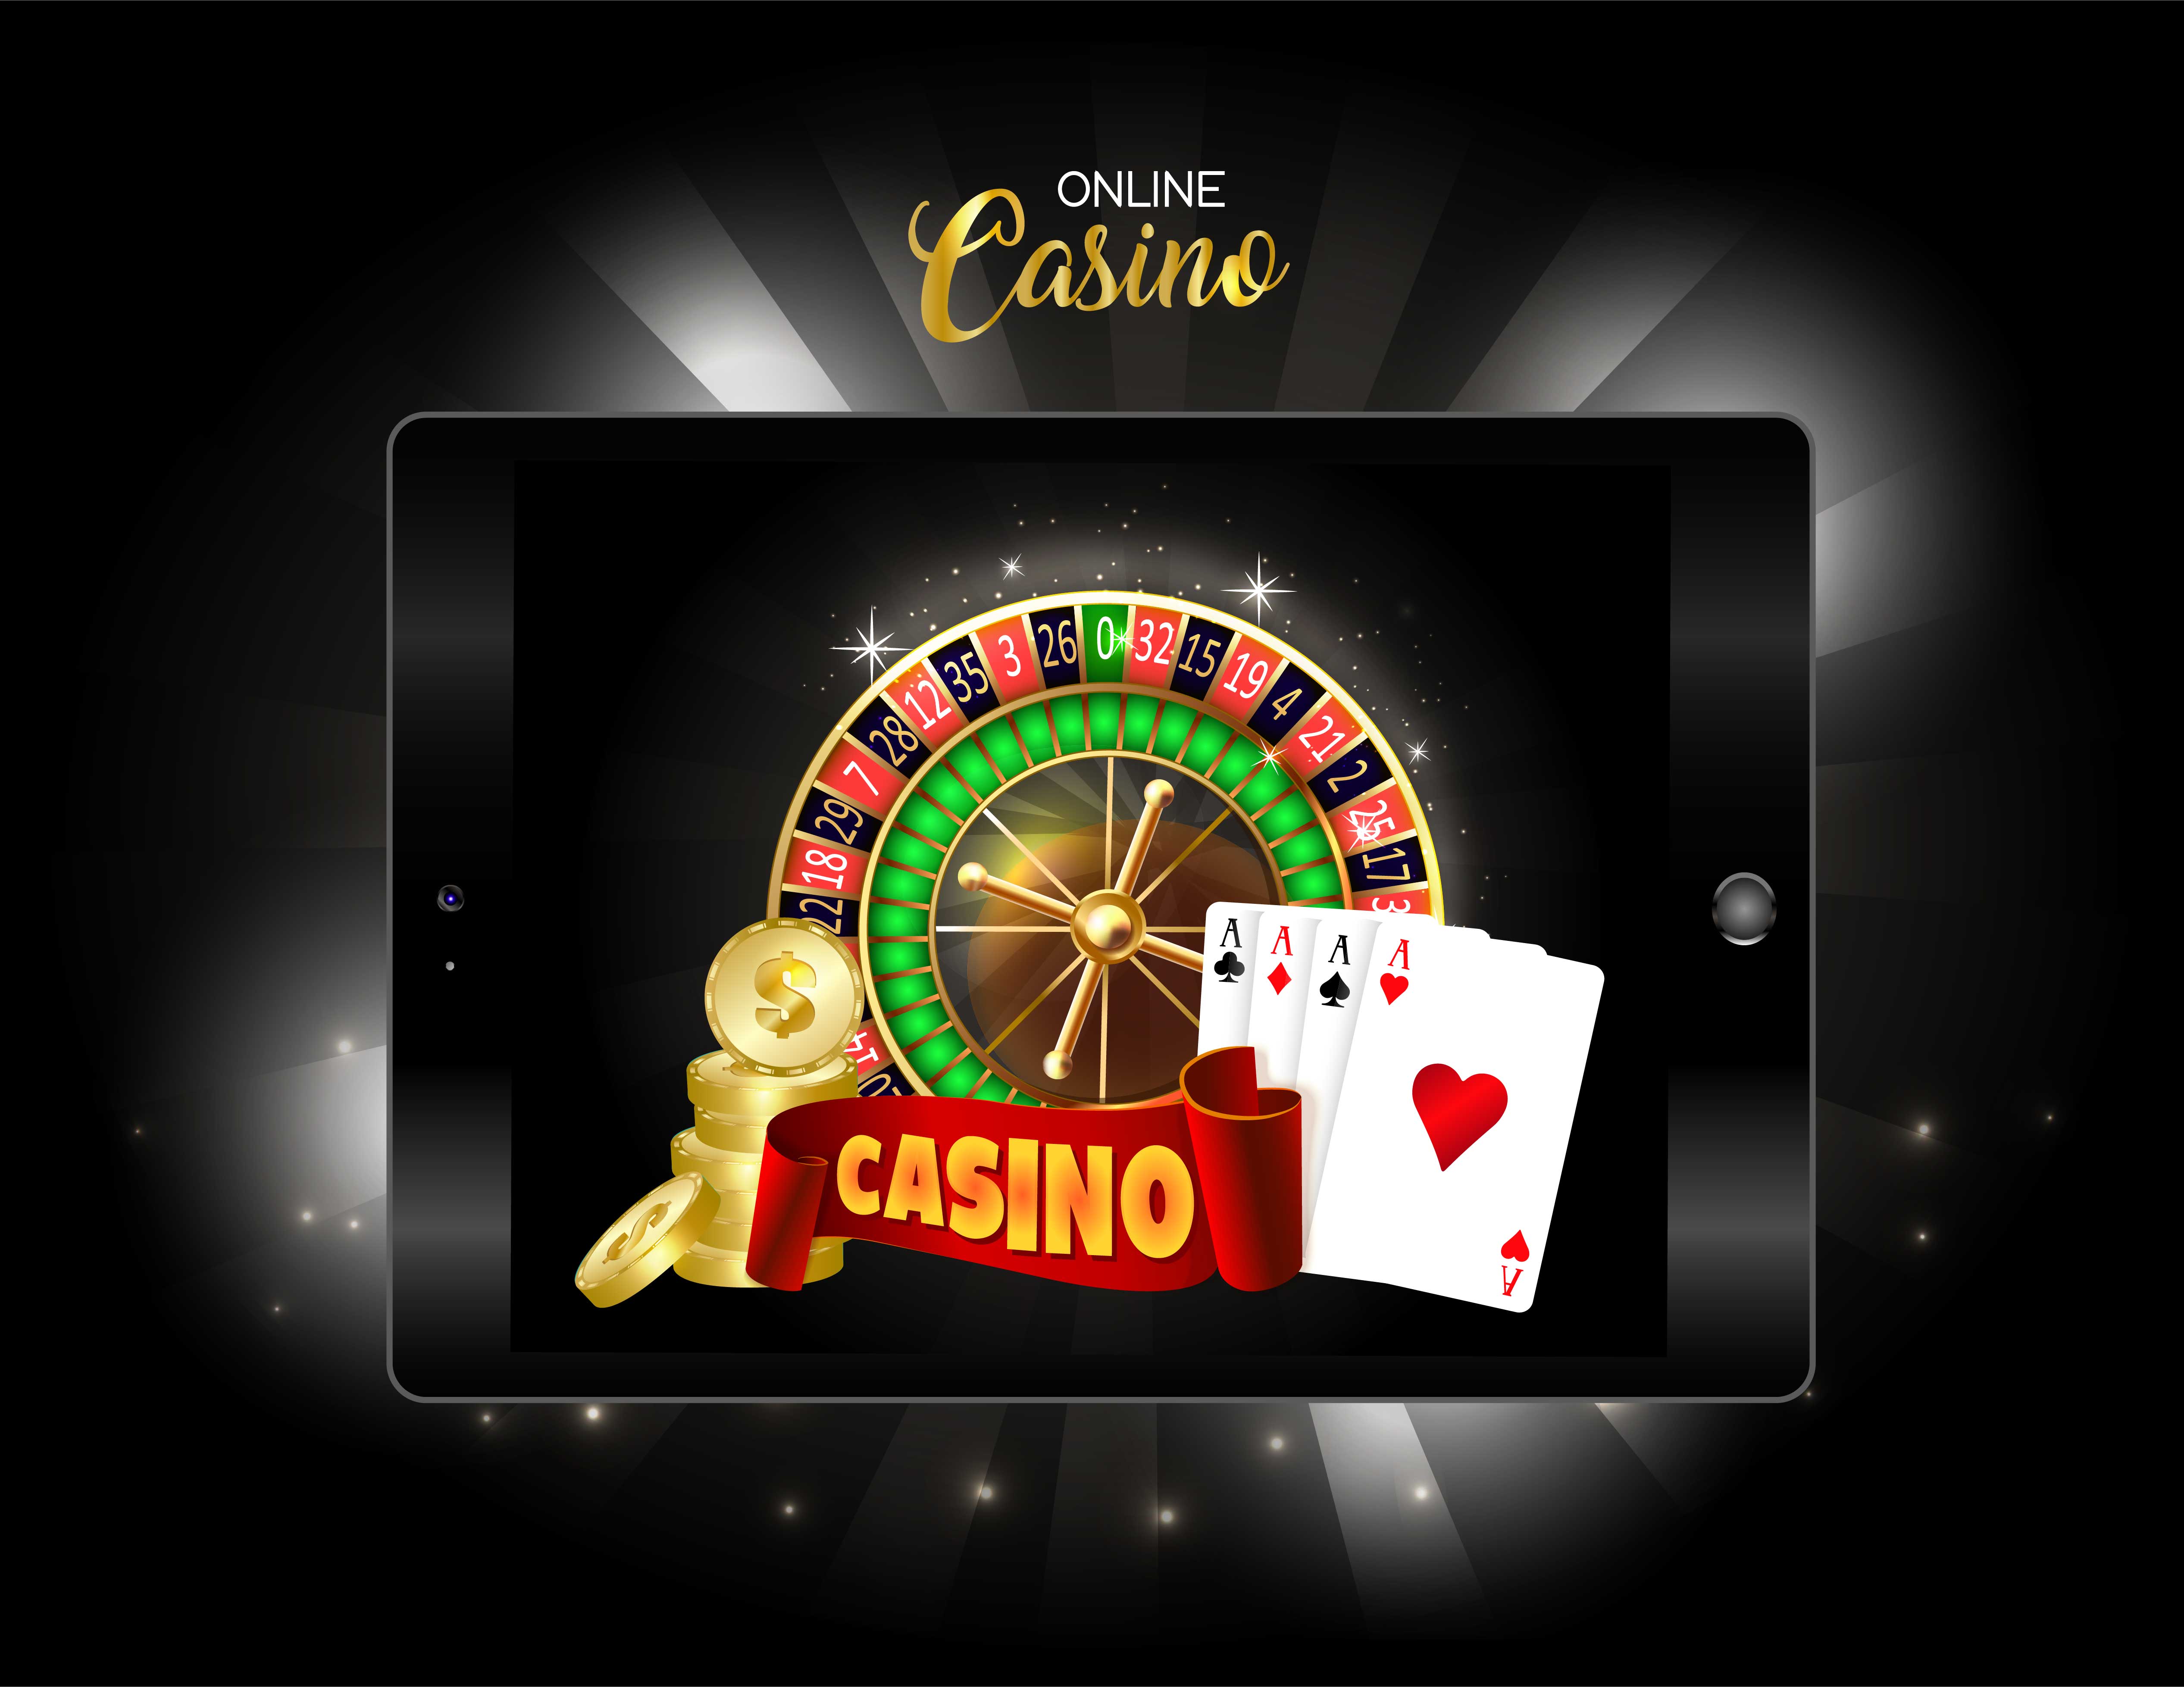 red dog online casino